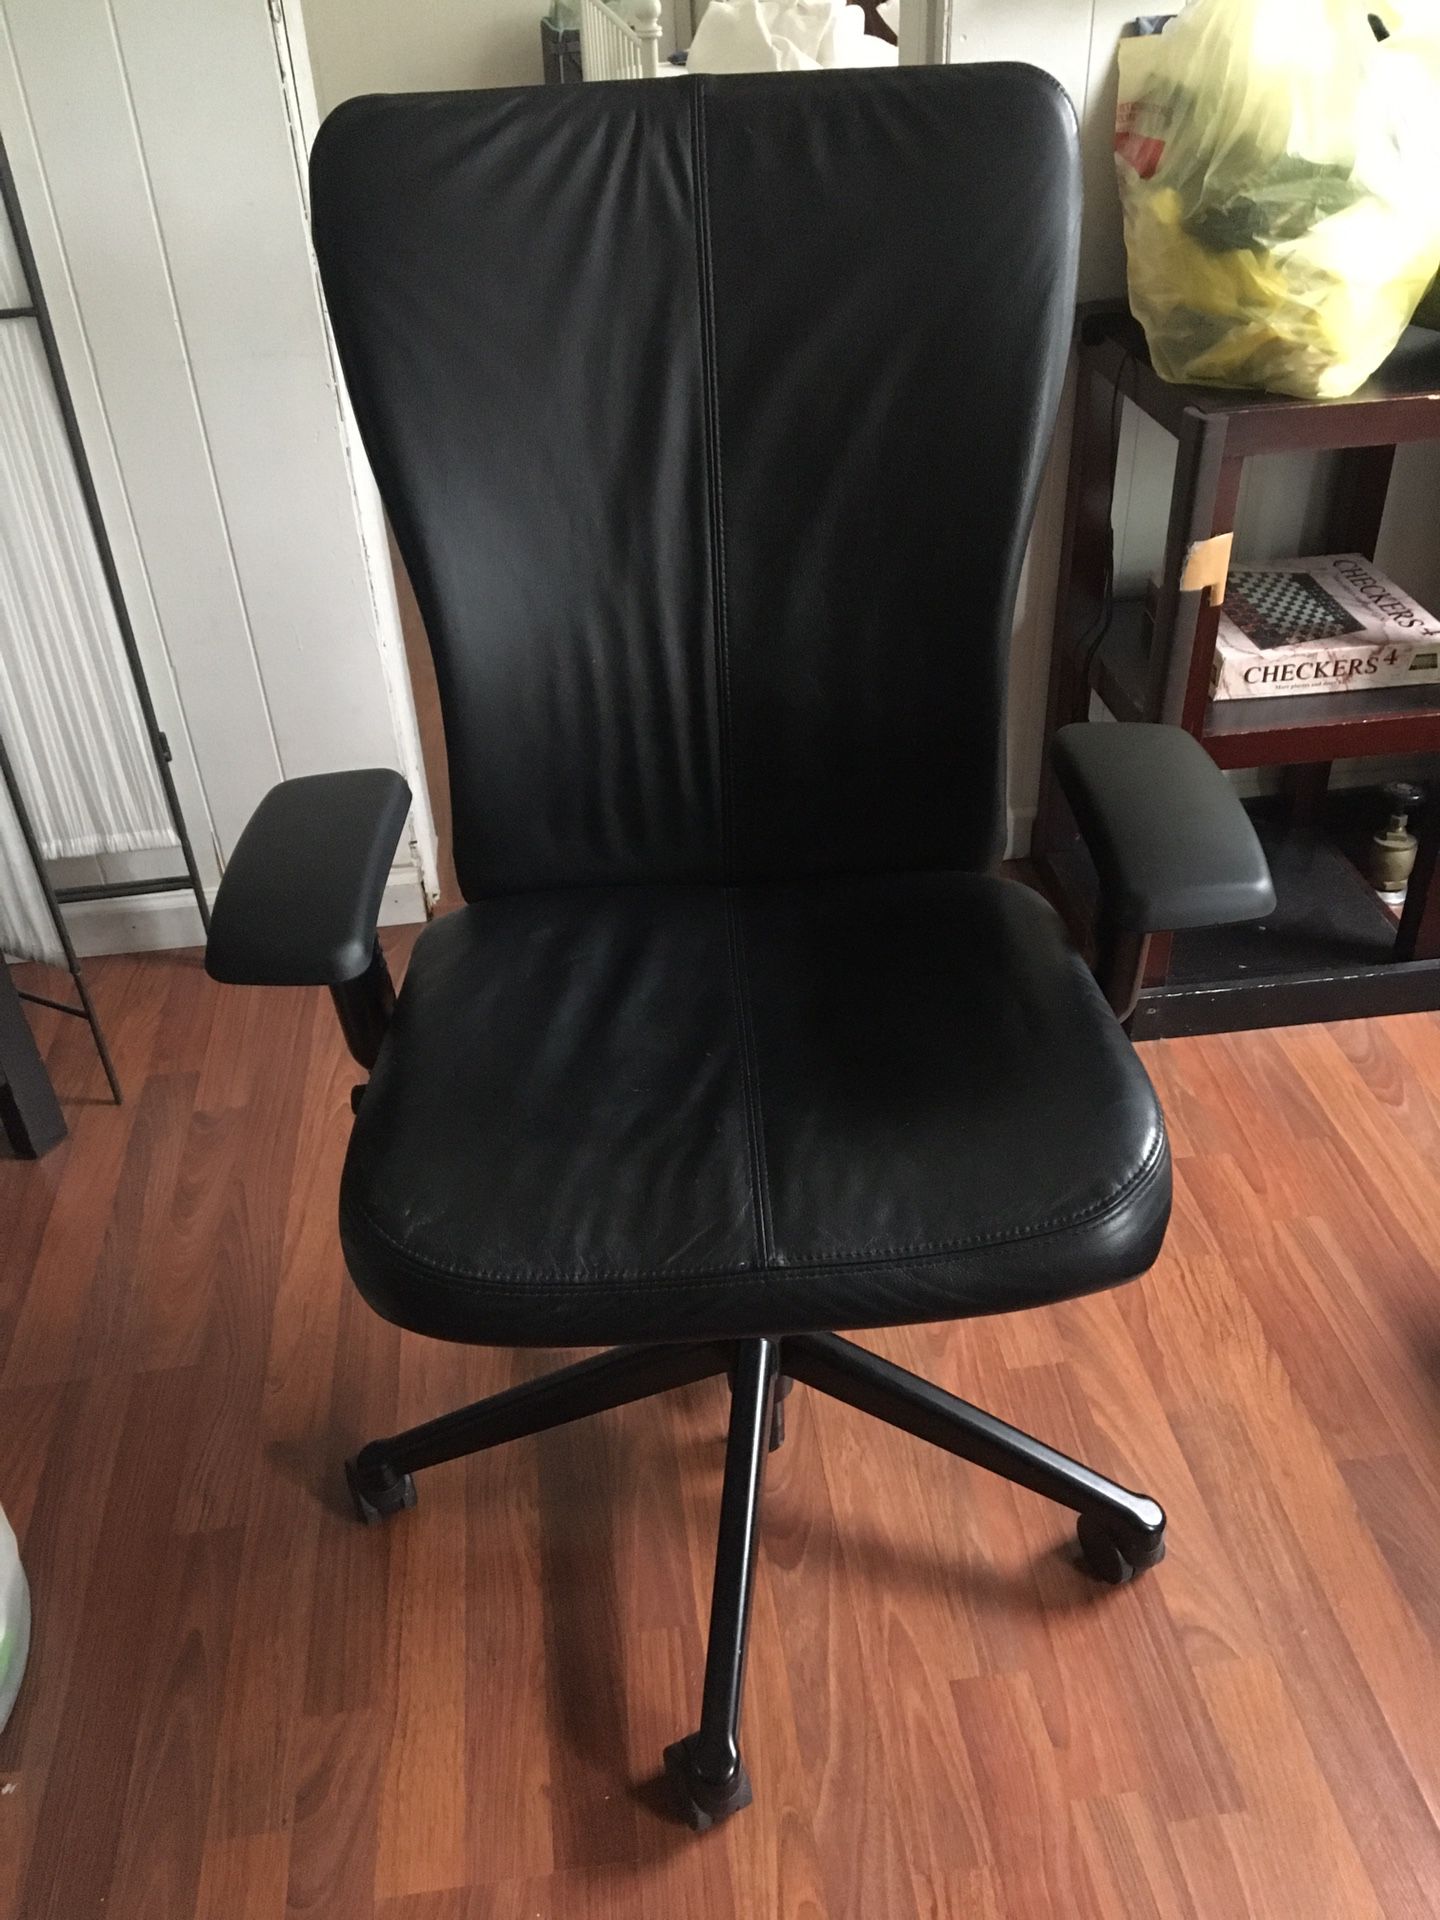 Haworth Zody chair (leather)